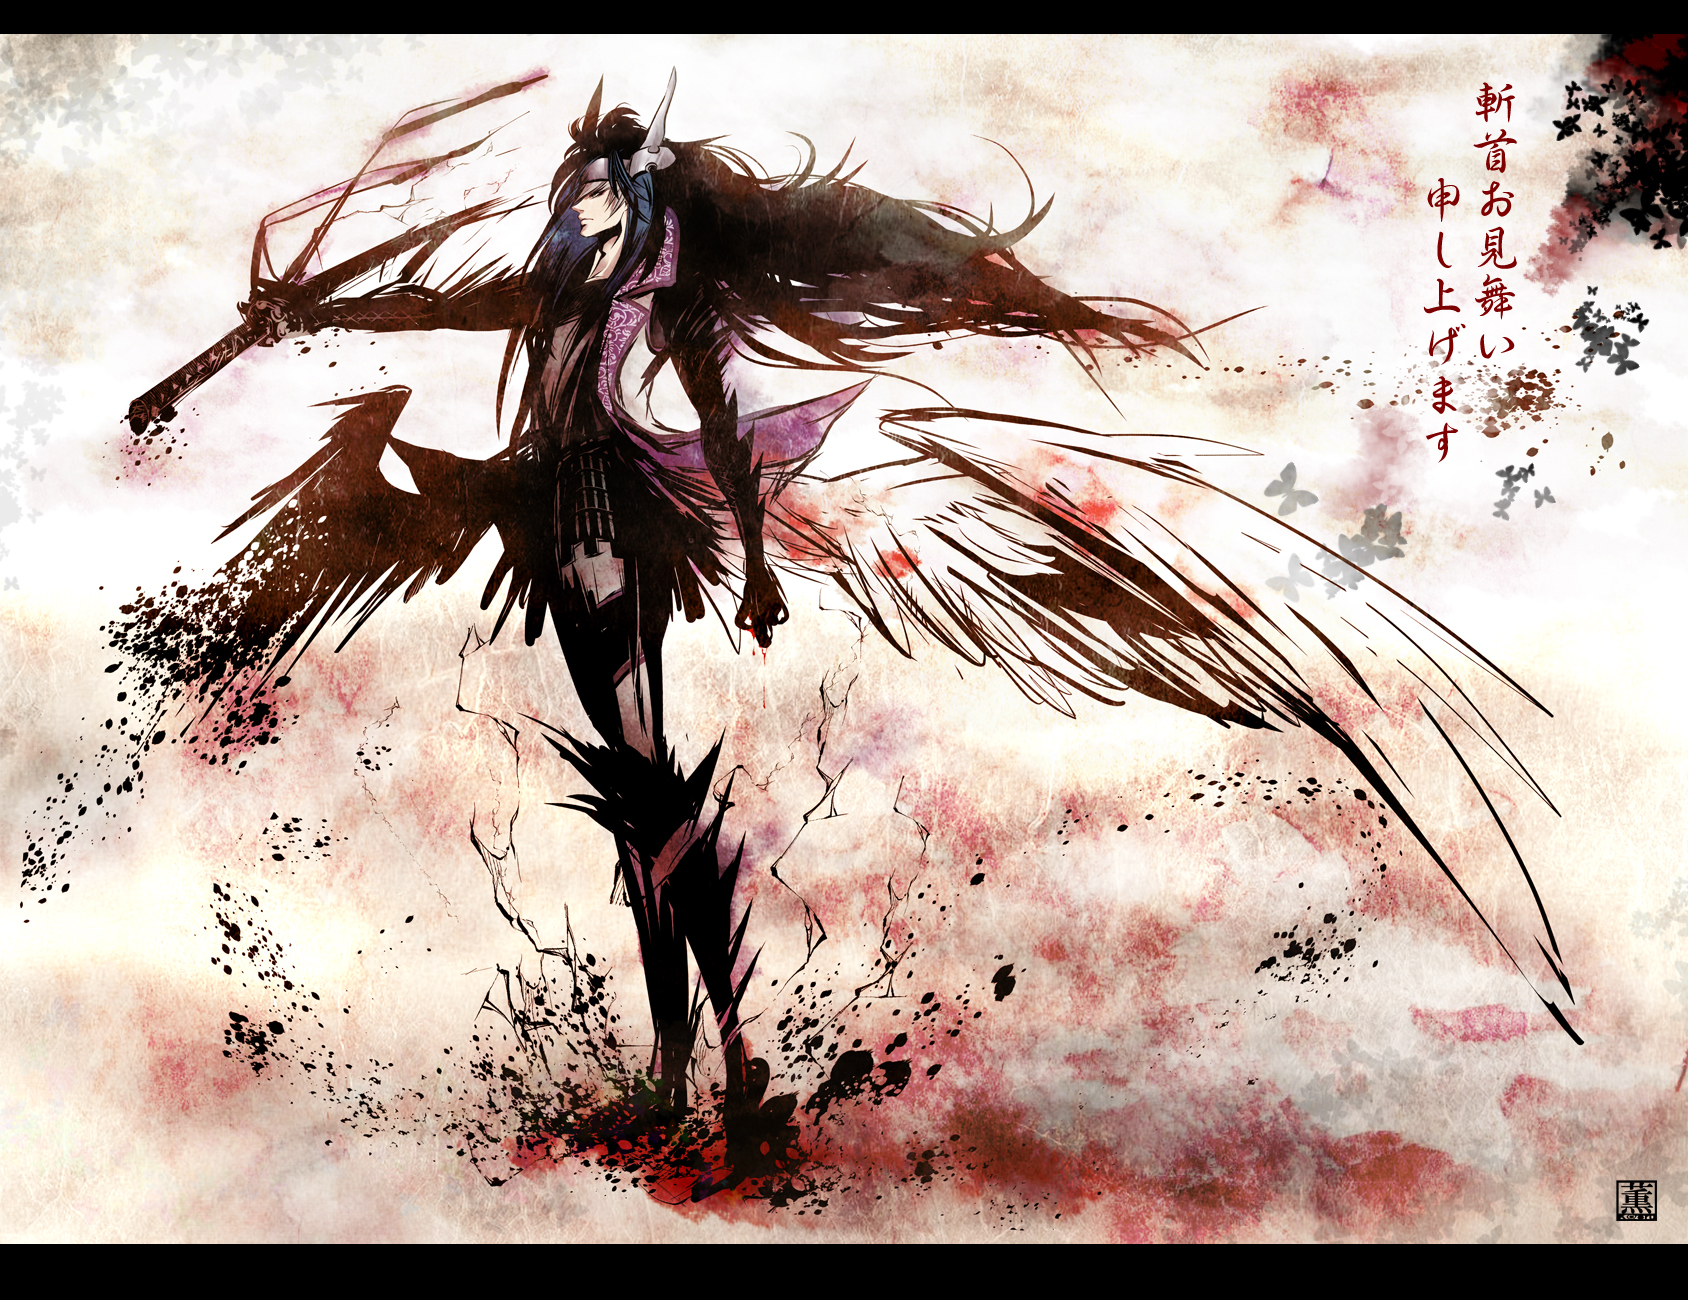 Sengoku Basara Wallpaper And Background Image - Anime Basara , HD Wallpaper & Backgrounds